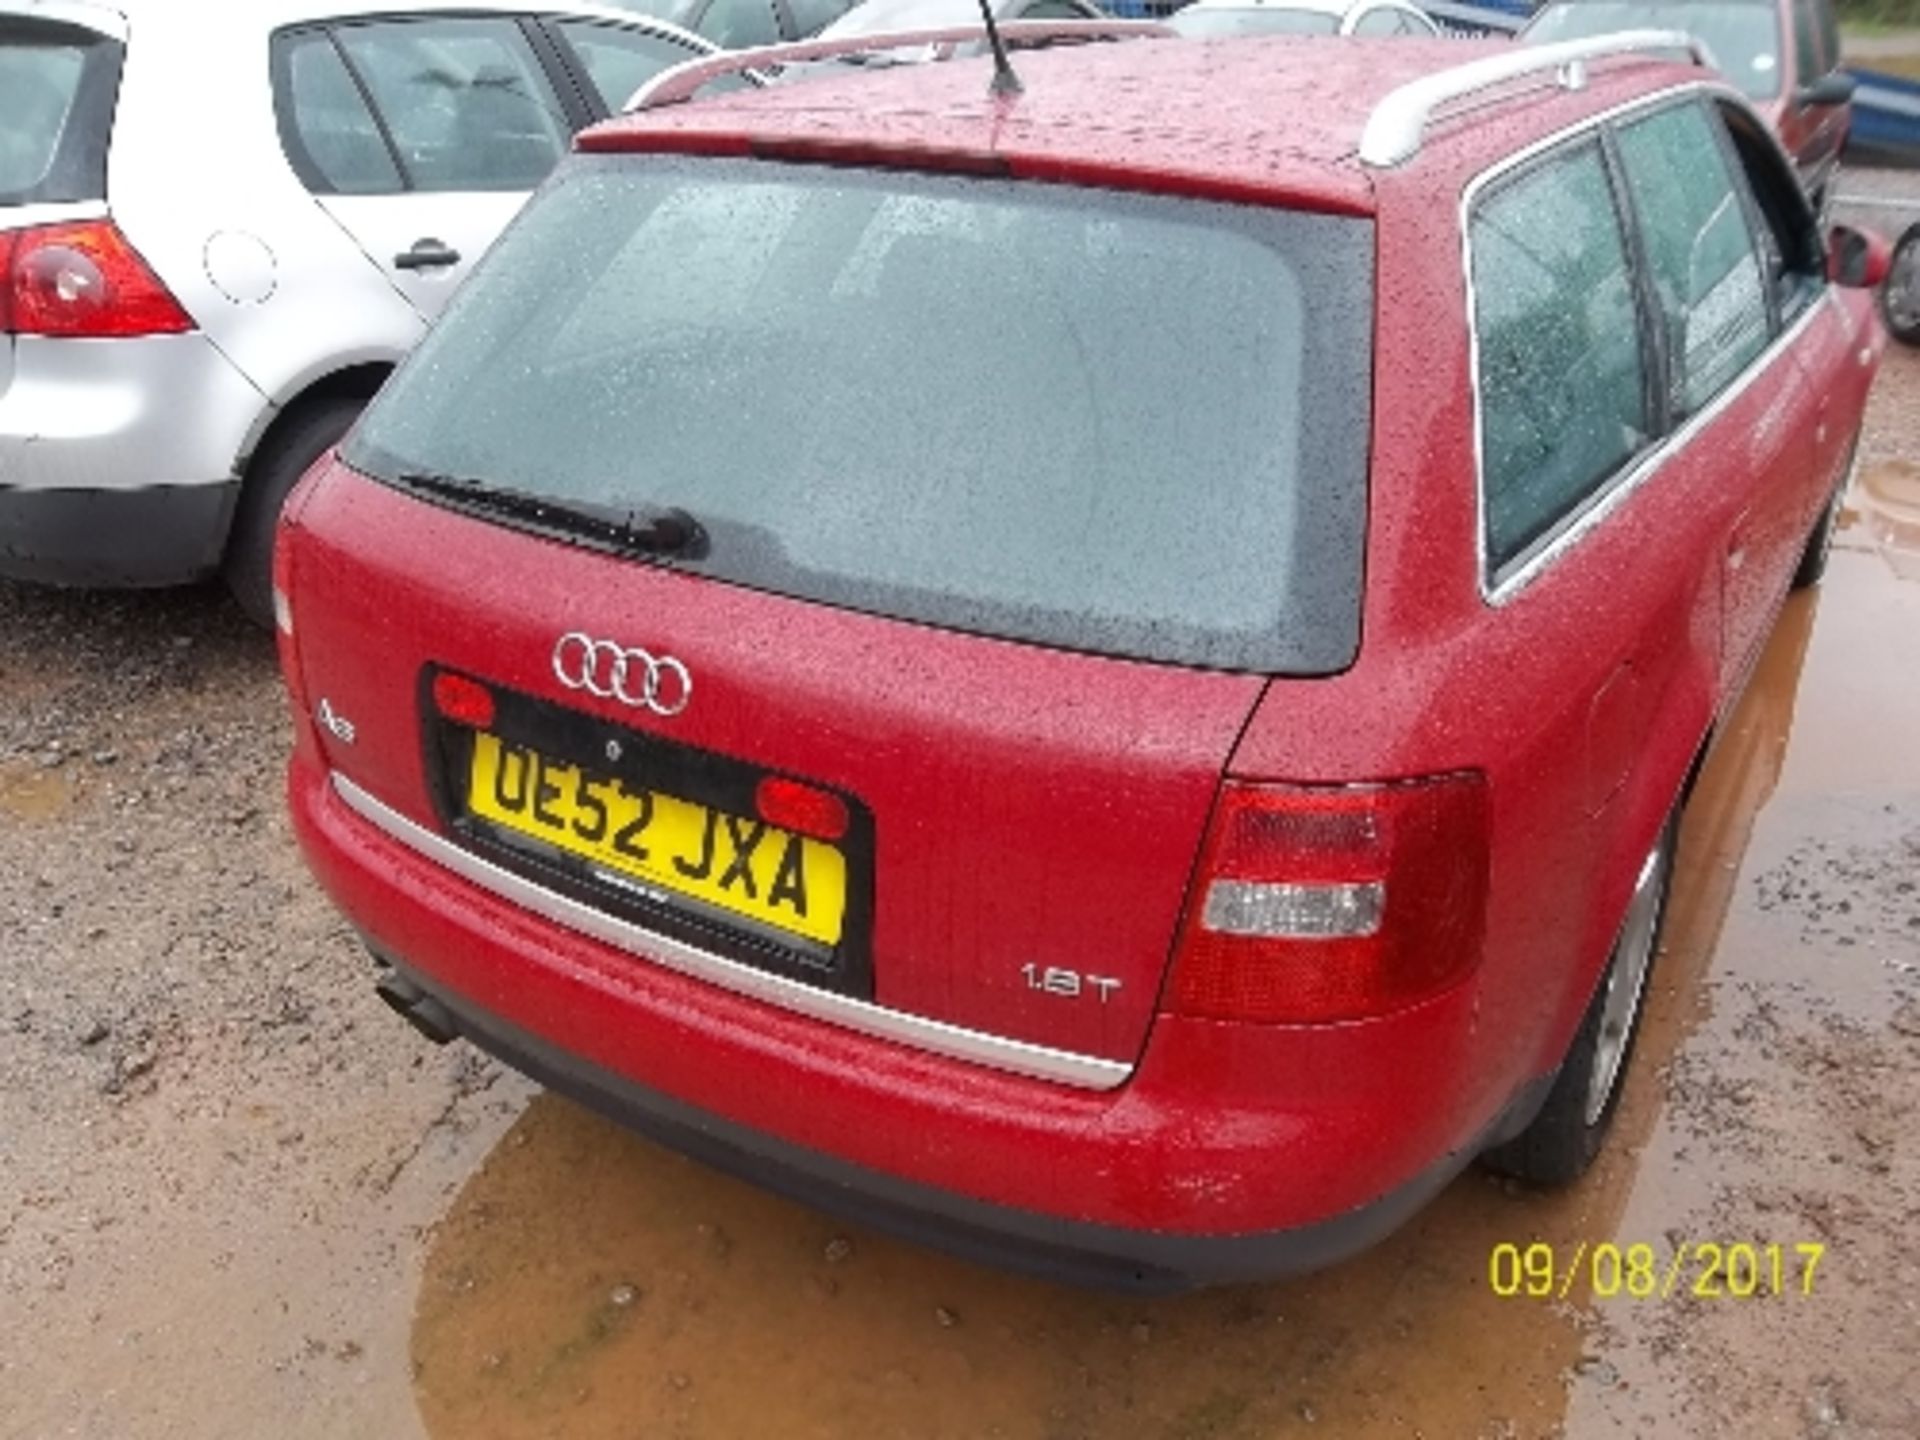 Audi A6 1.8 T SE Estate - OE52 JXA Date of registration: 08.01.2003 1781cc, petrol, manual, red - Image 3 of 4